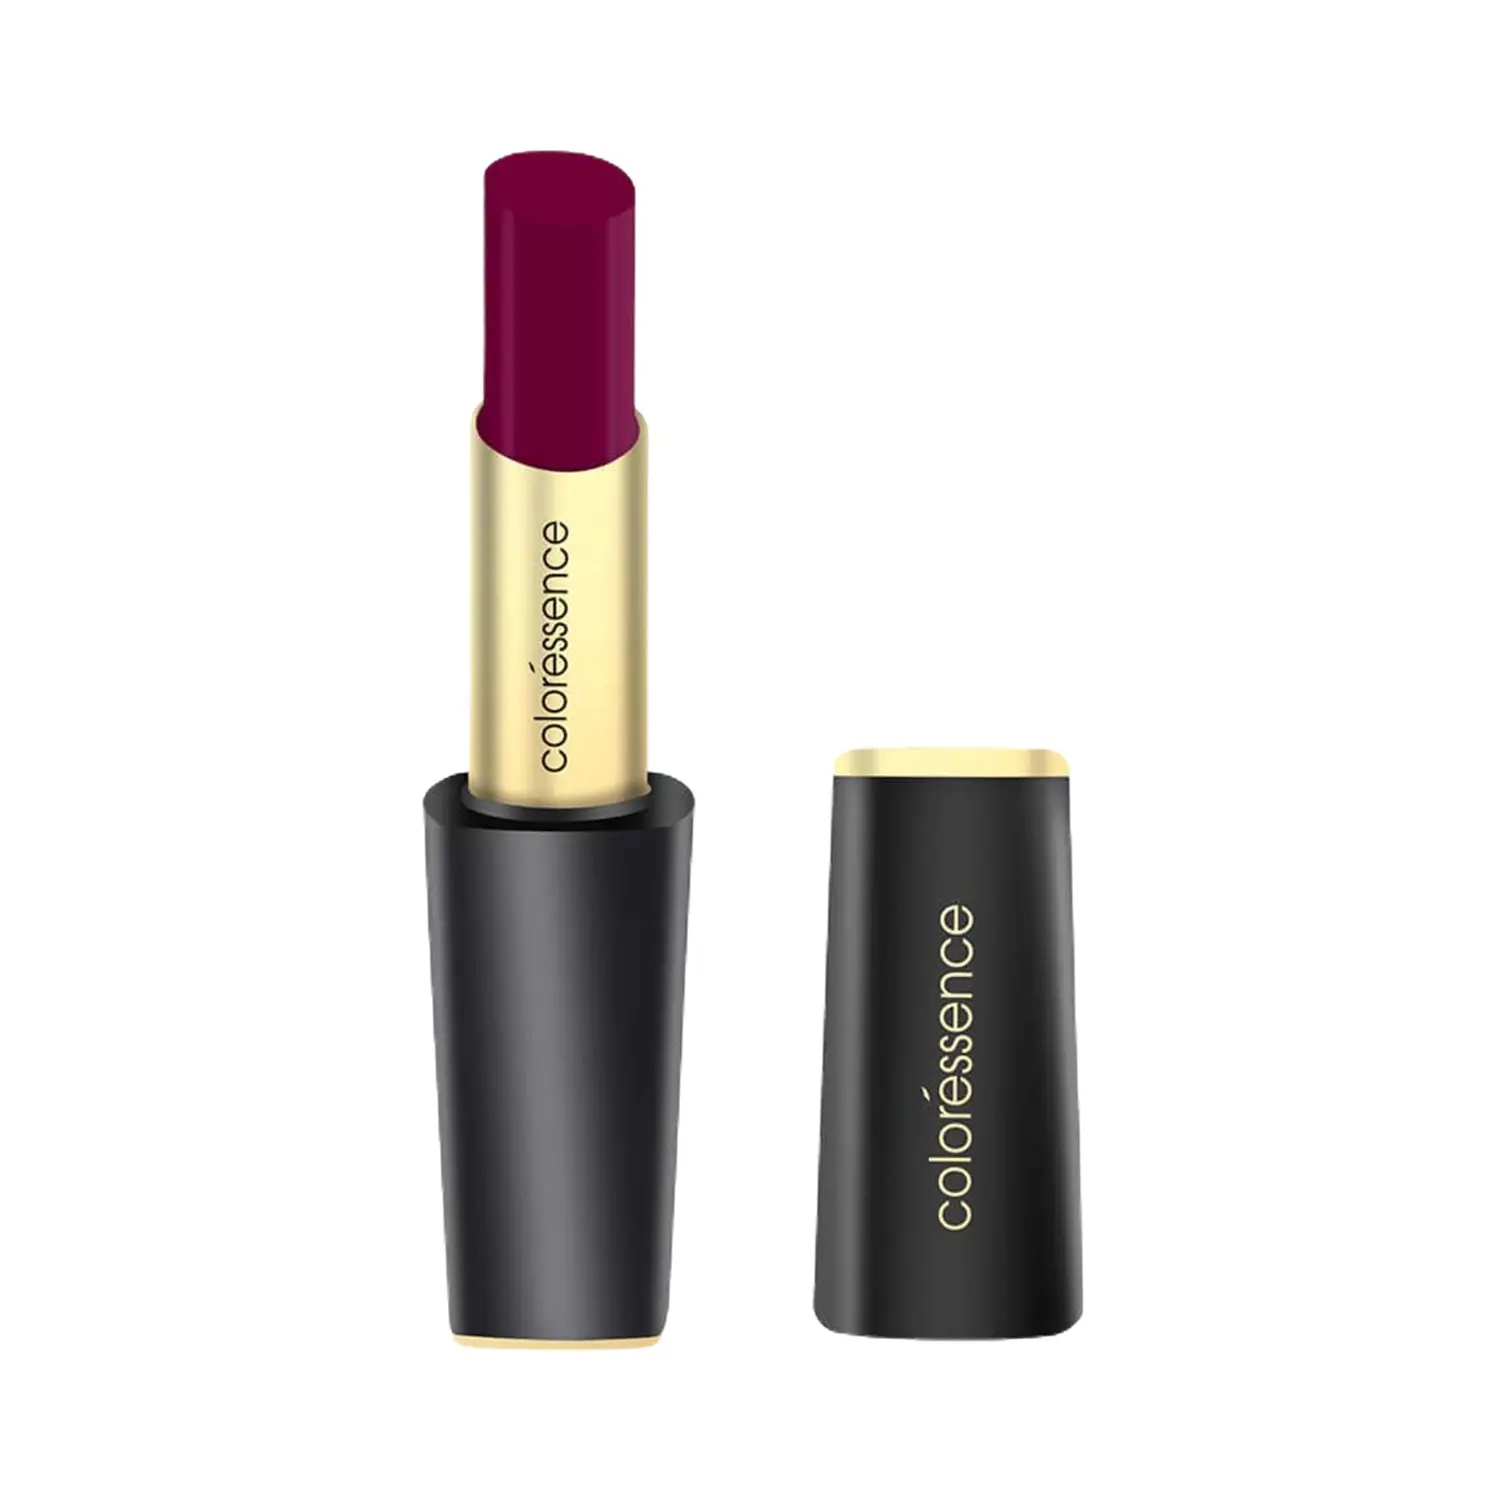 Coloressence | Coloressence Intense Long Wear Lip Color Glossy Lipstick - Temptation (2.5g)